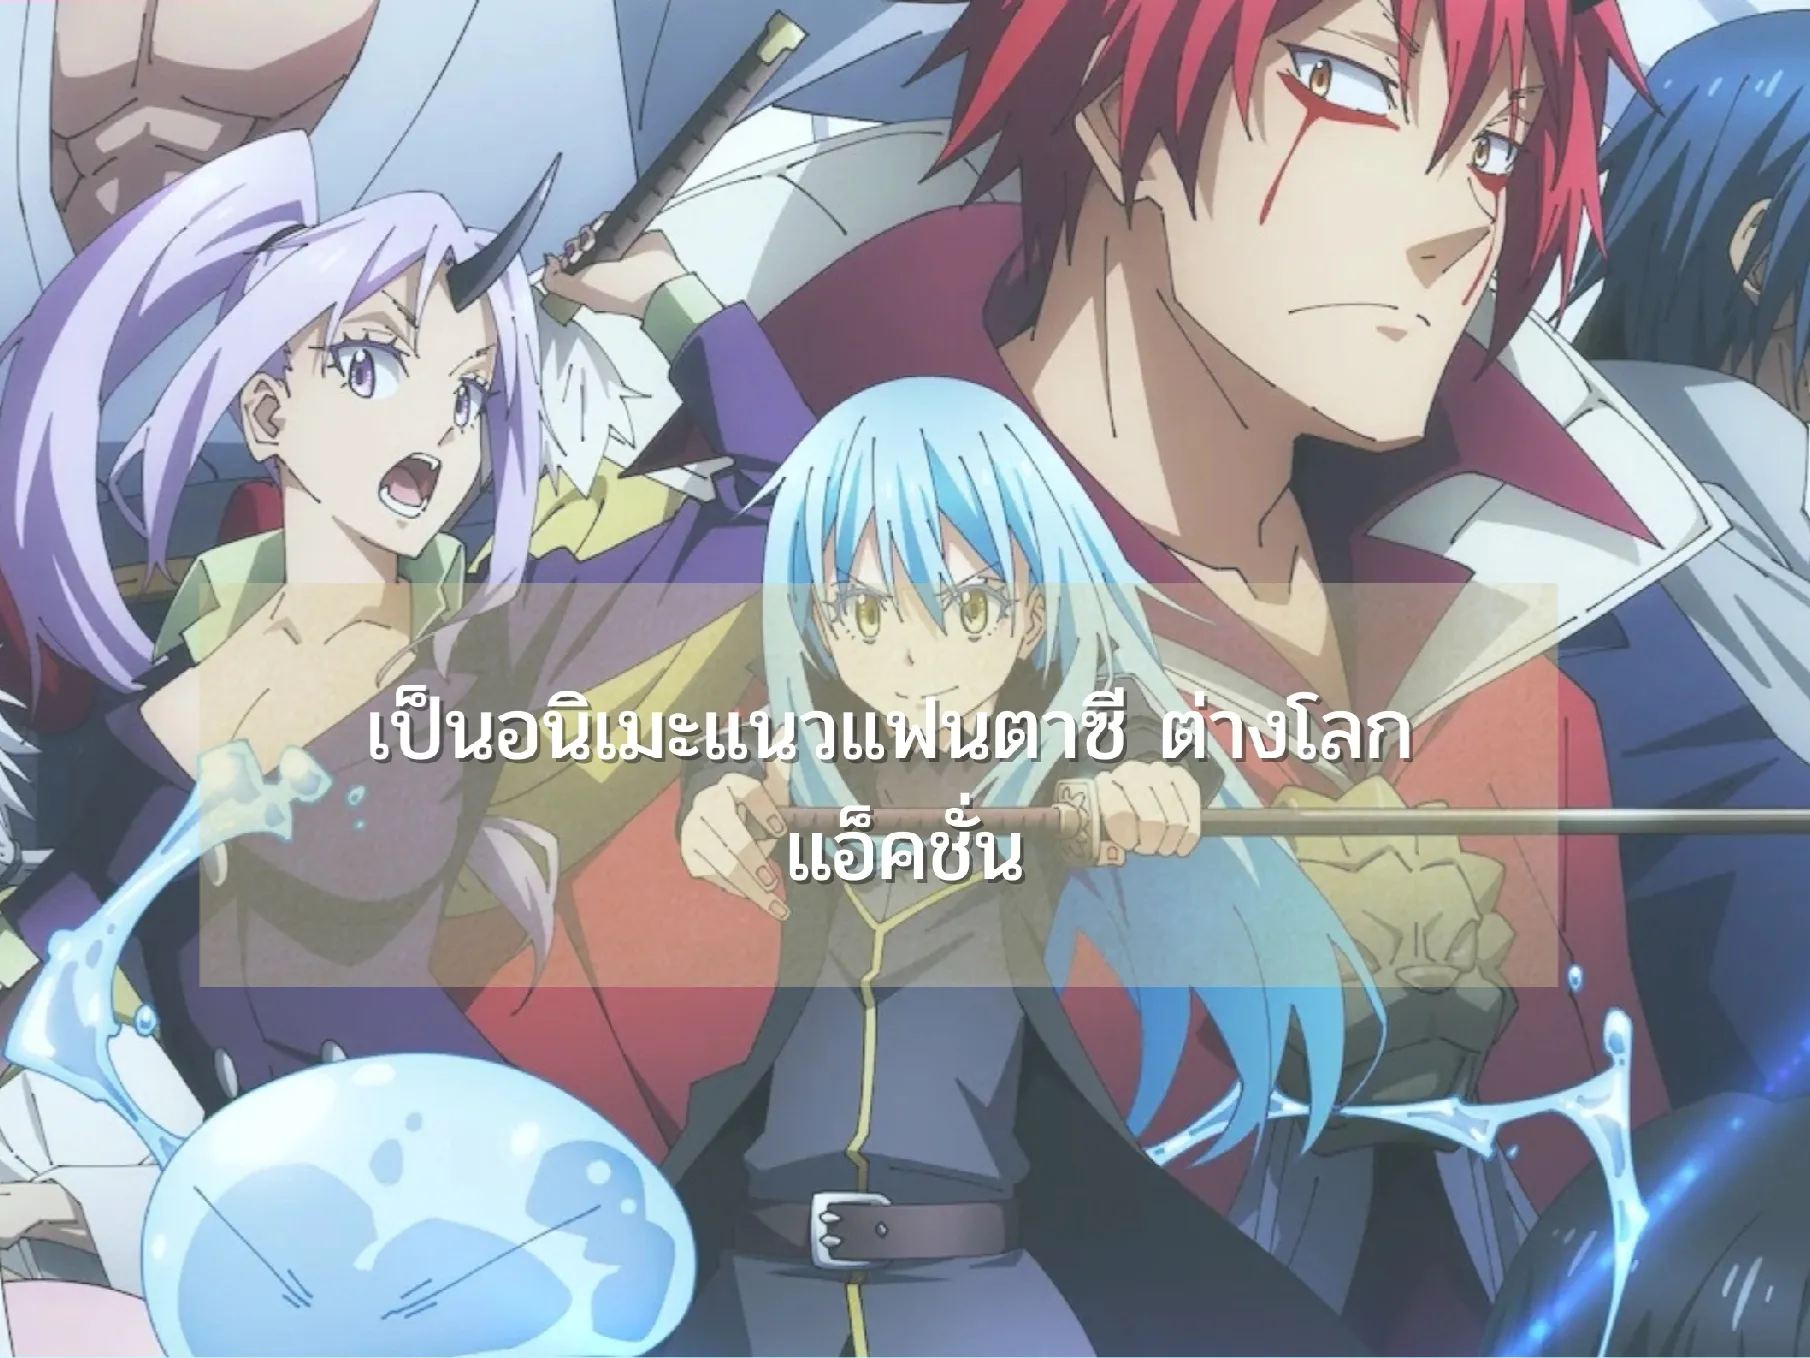 Otaku Anime Indonesia on X: Tensei shitara Slime Datta Ken (That